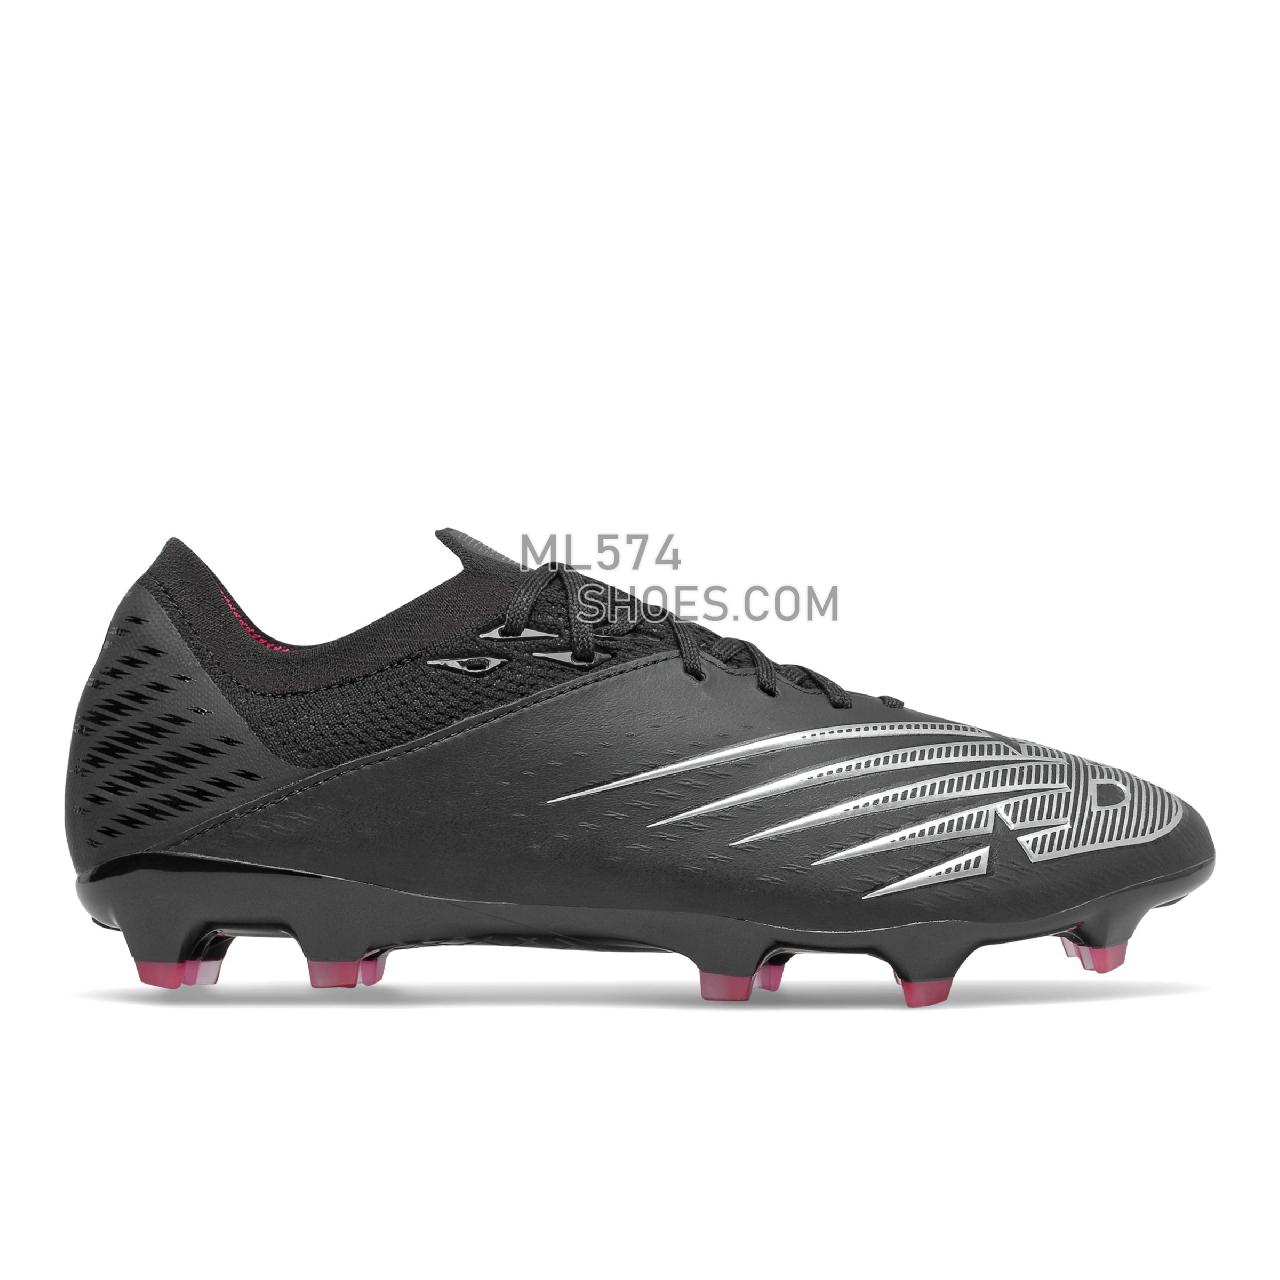 New Balance Furon V6+ Leather FG - Men's Soccer - Black with Alpha Pink - MSFKFB65